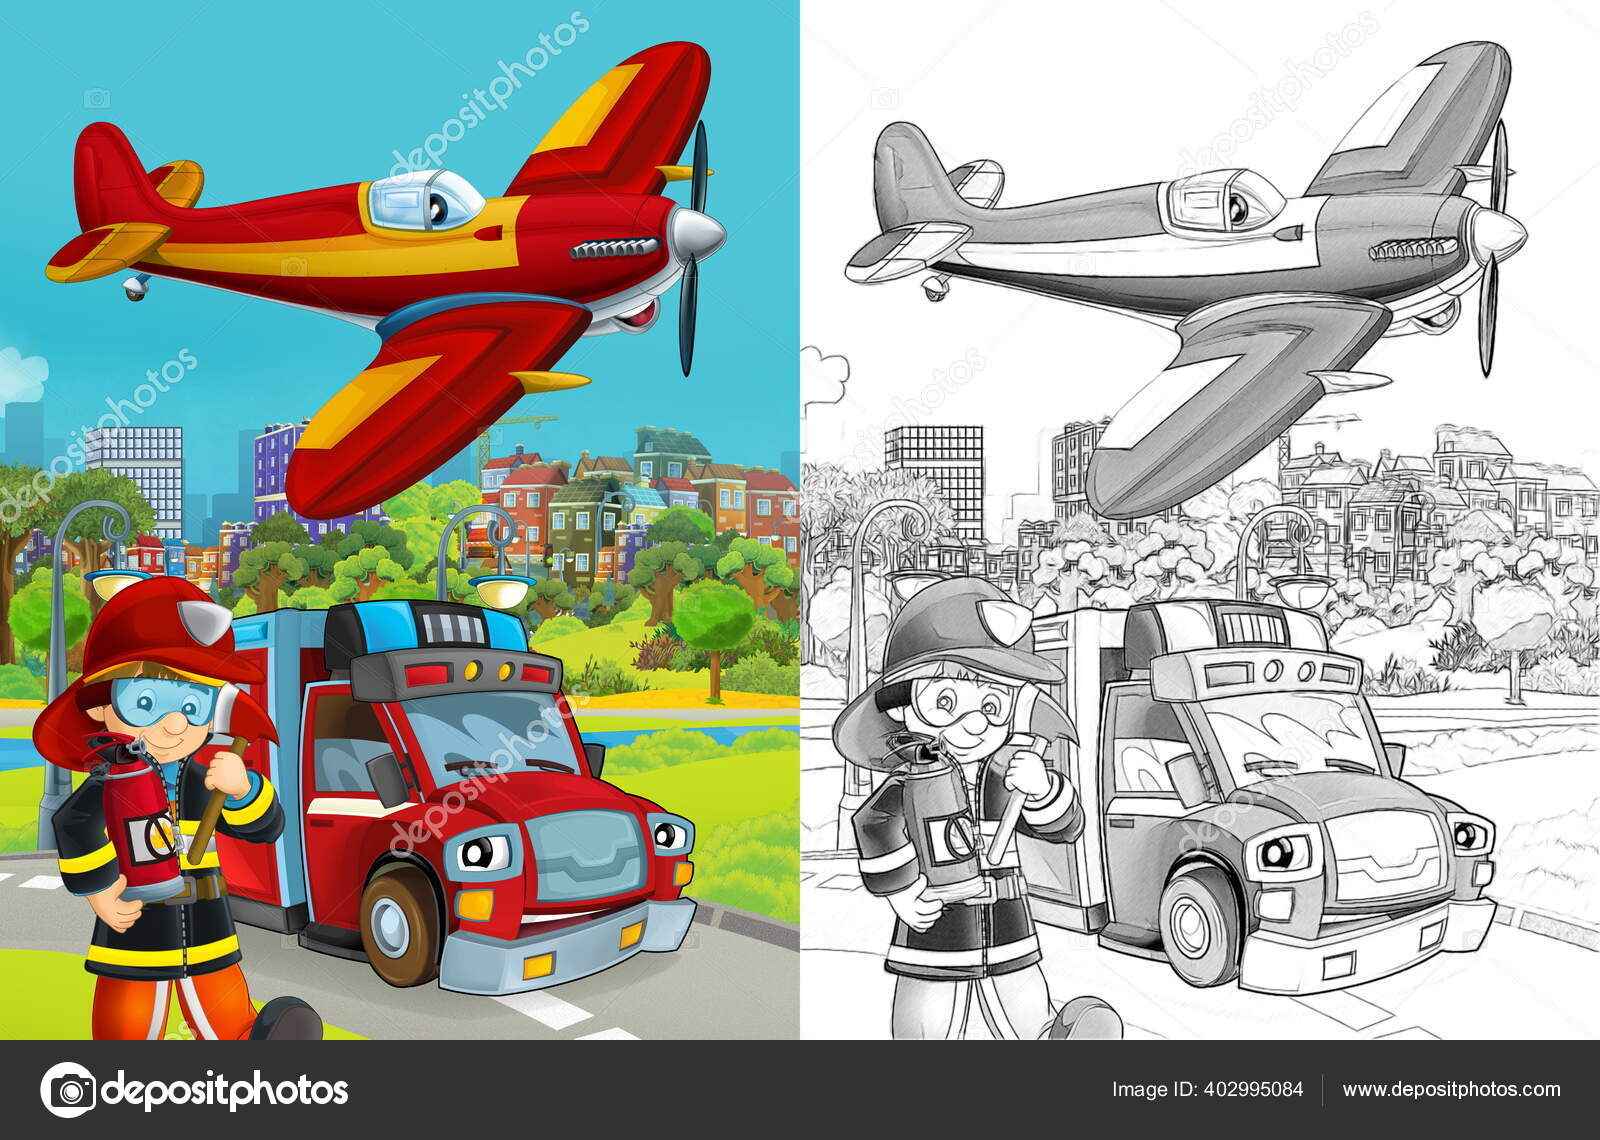 Adegan Sketsa Kartun Dengan Kendaraan Pemadam Kebakaran Jalan Dan Petugas Stok Foto Illustrator Hft 402995084